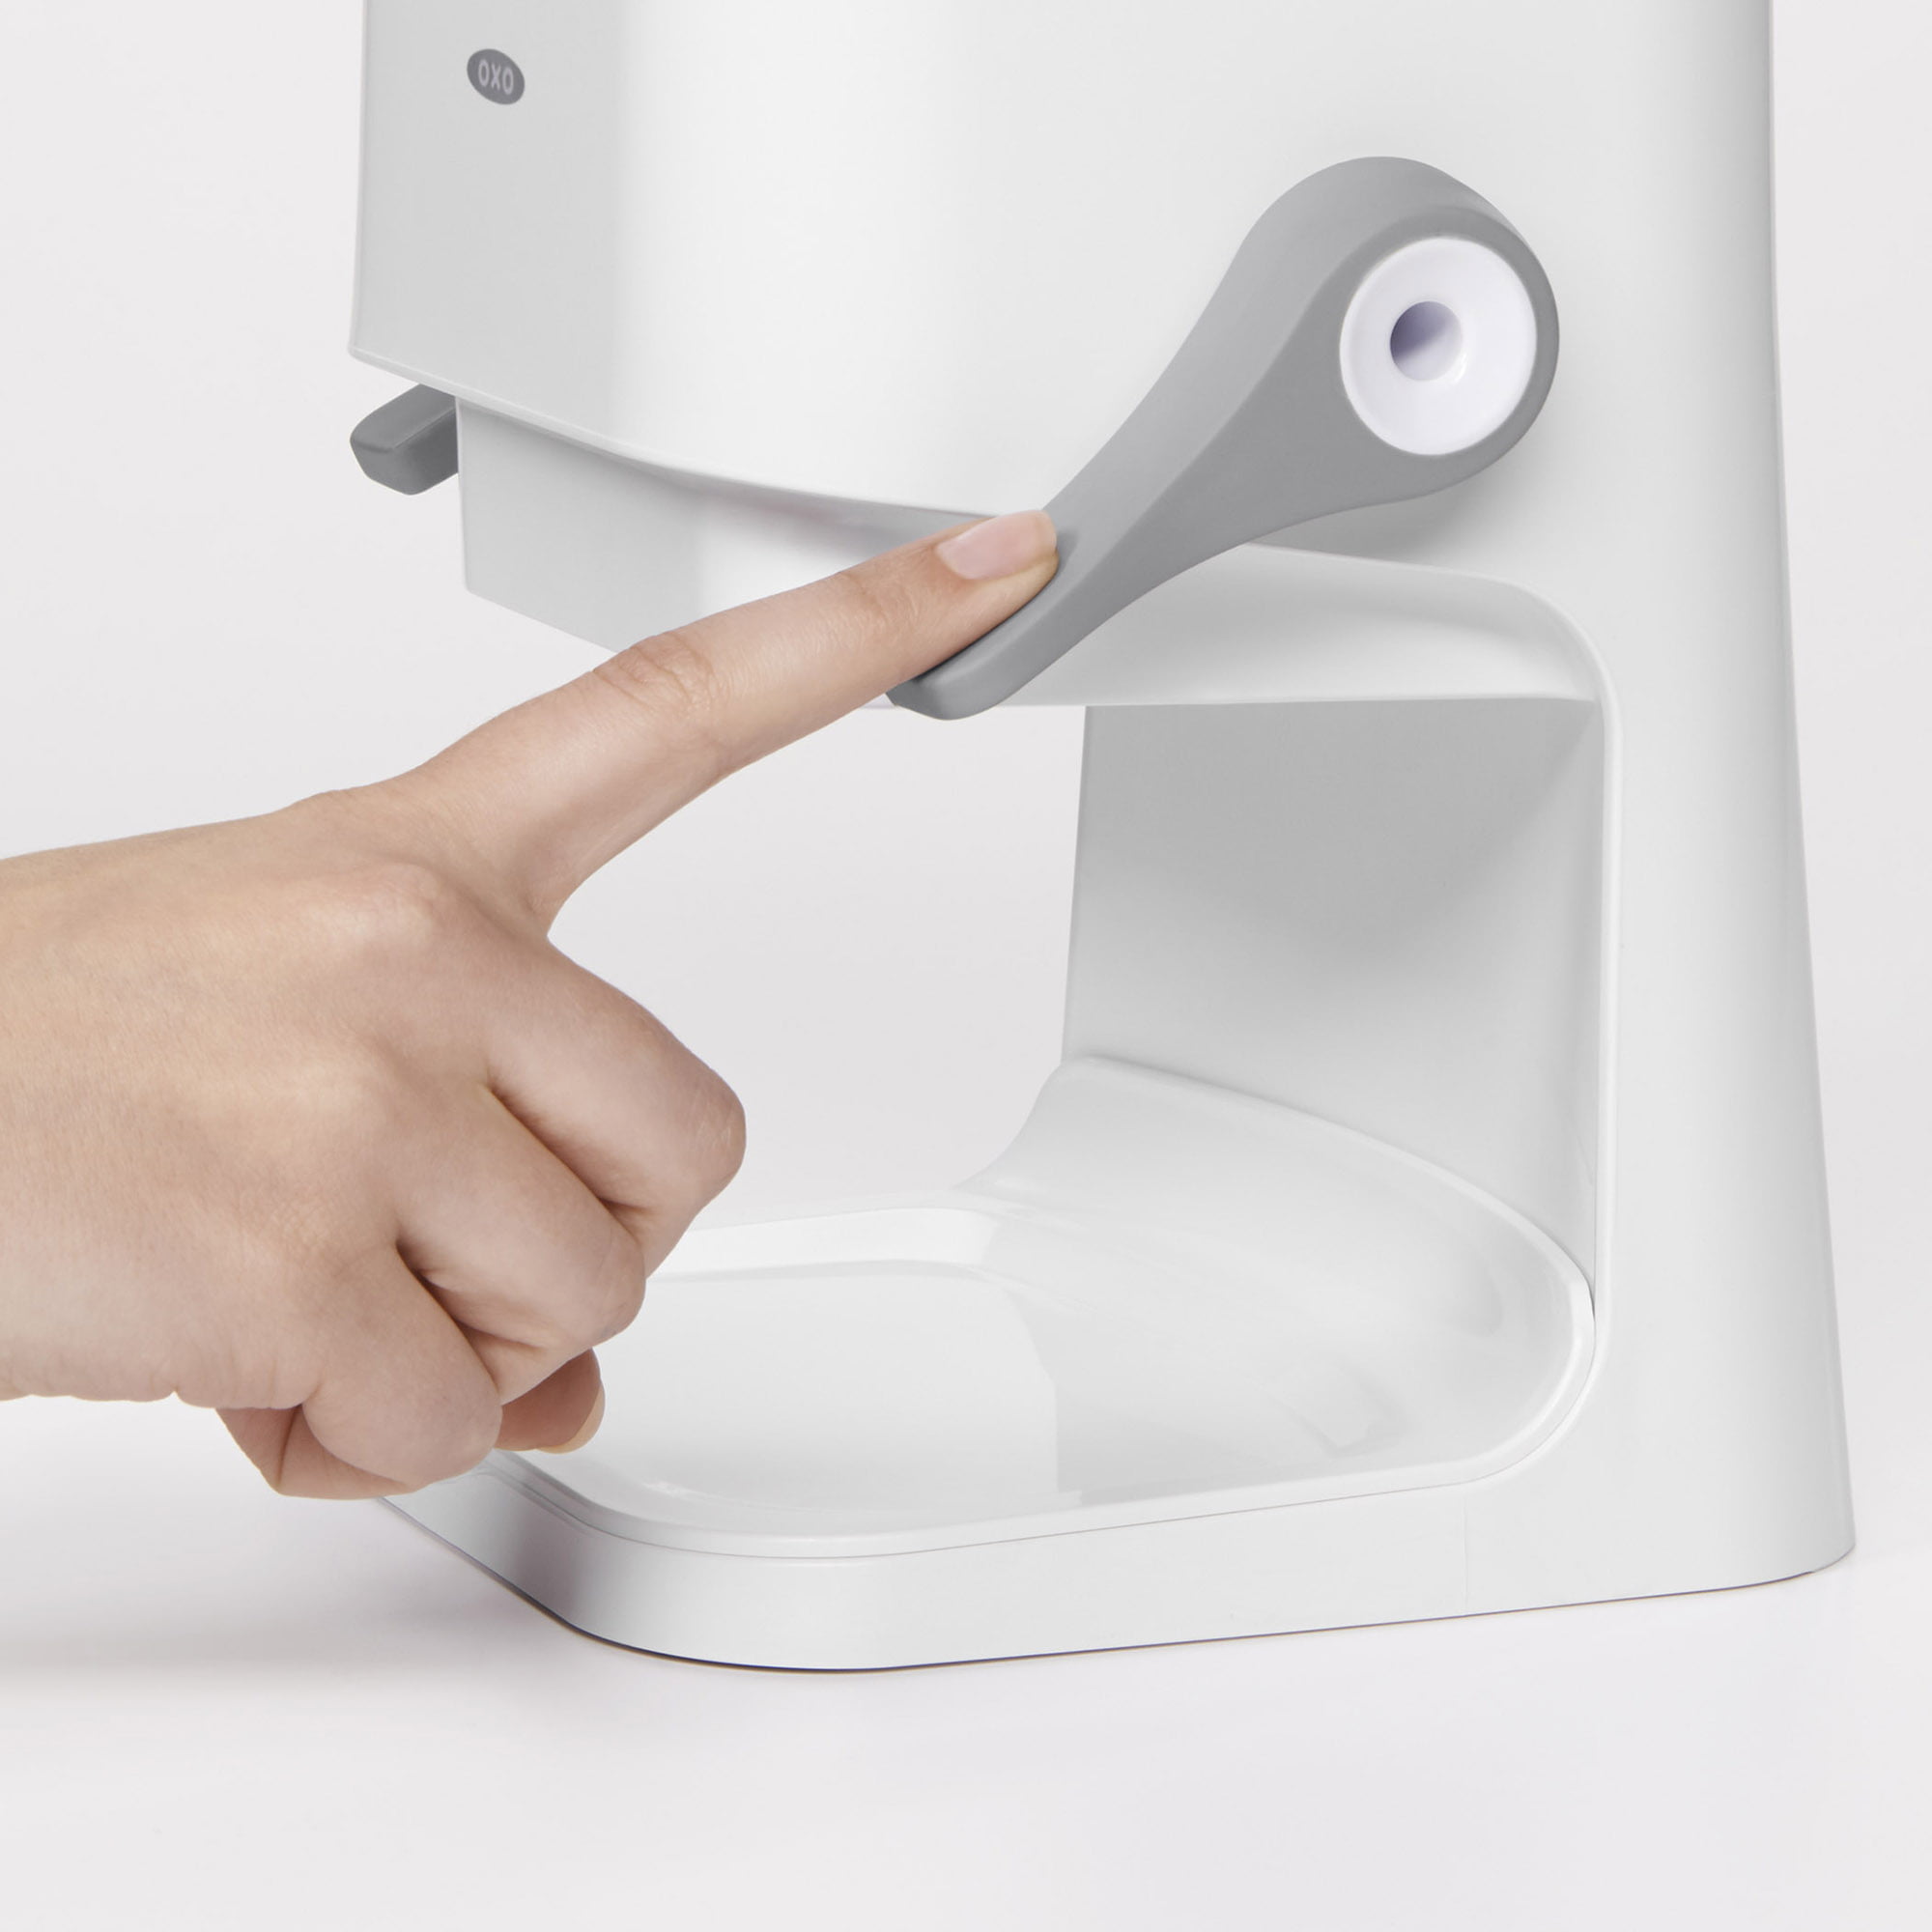 OXO Good Grips Small POP Cereal Dispenser 2.5 Quart 11113900